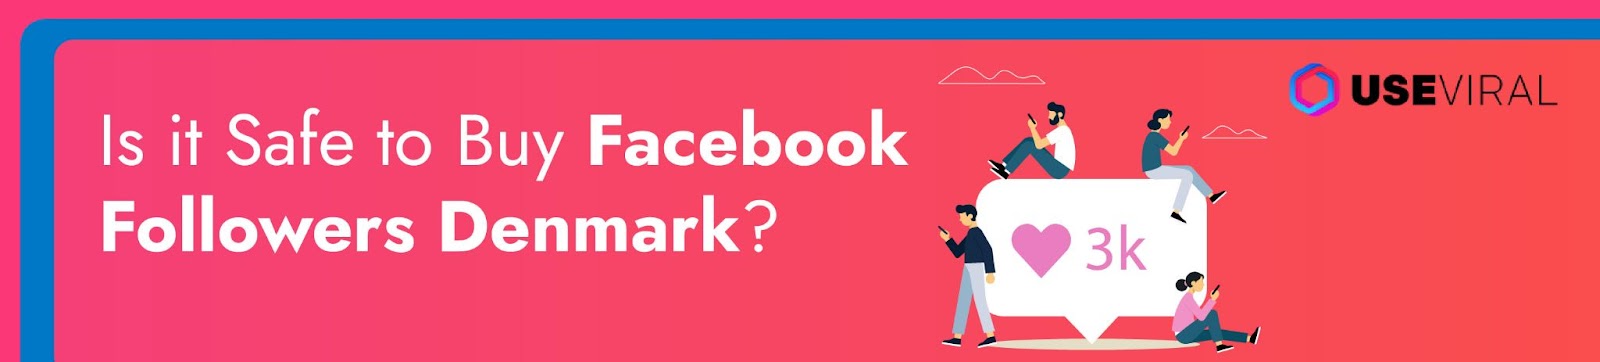 Is it Safe to Buy Facebook Followers Denmark?